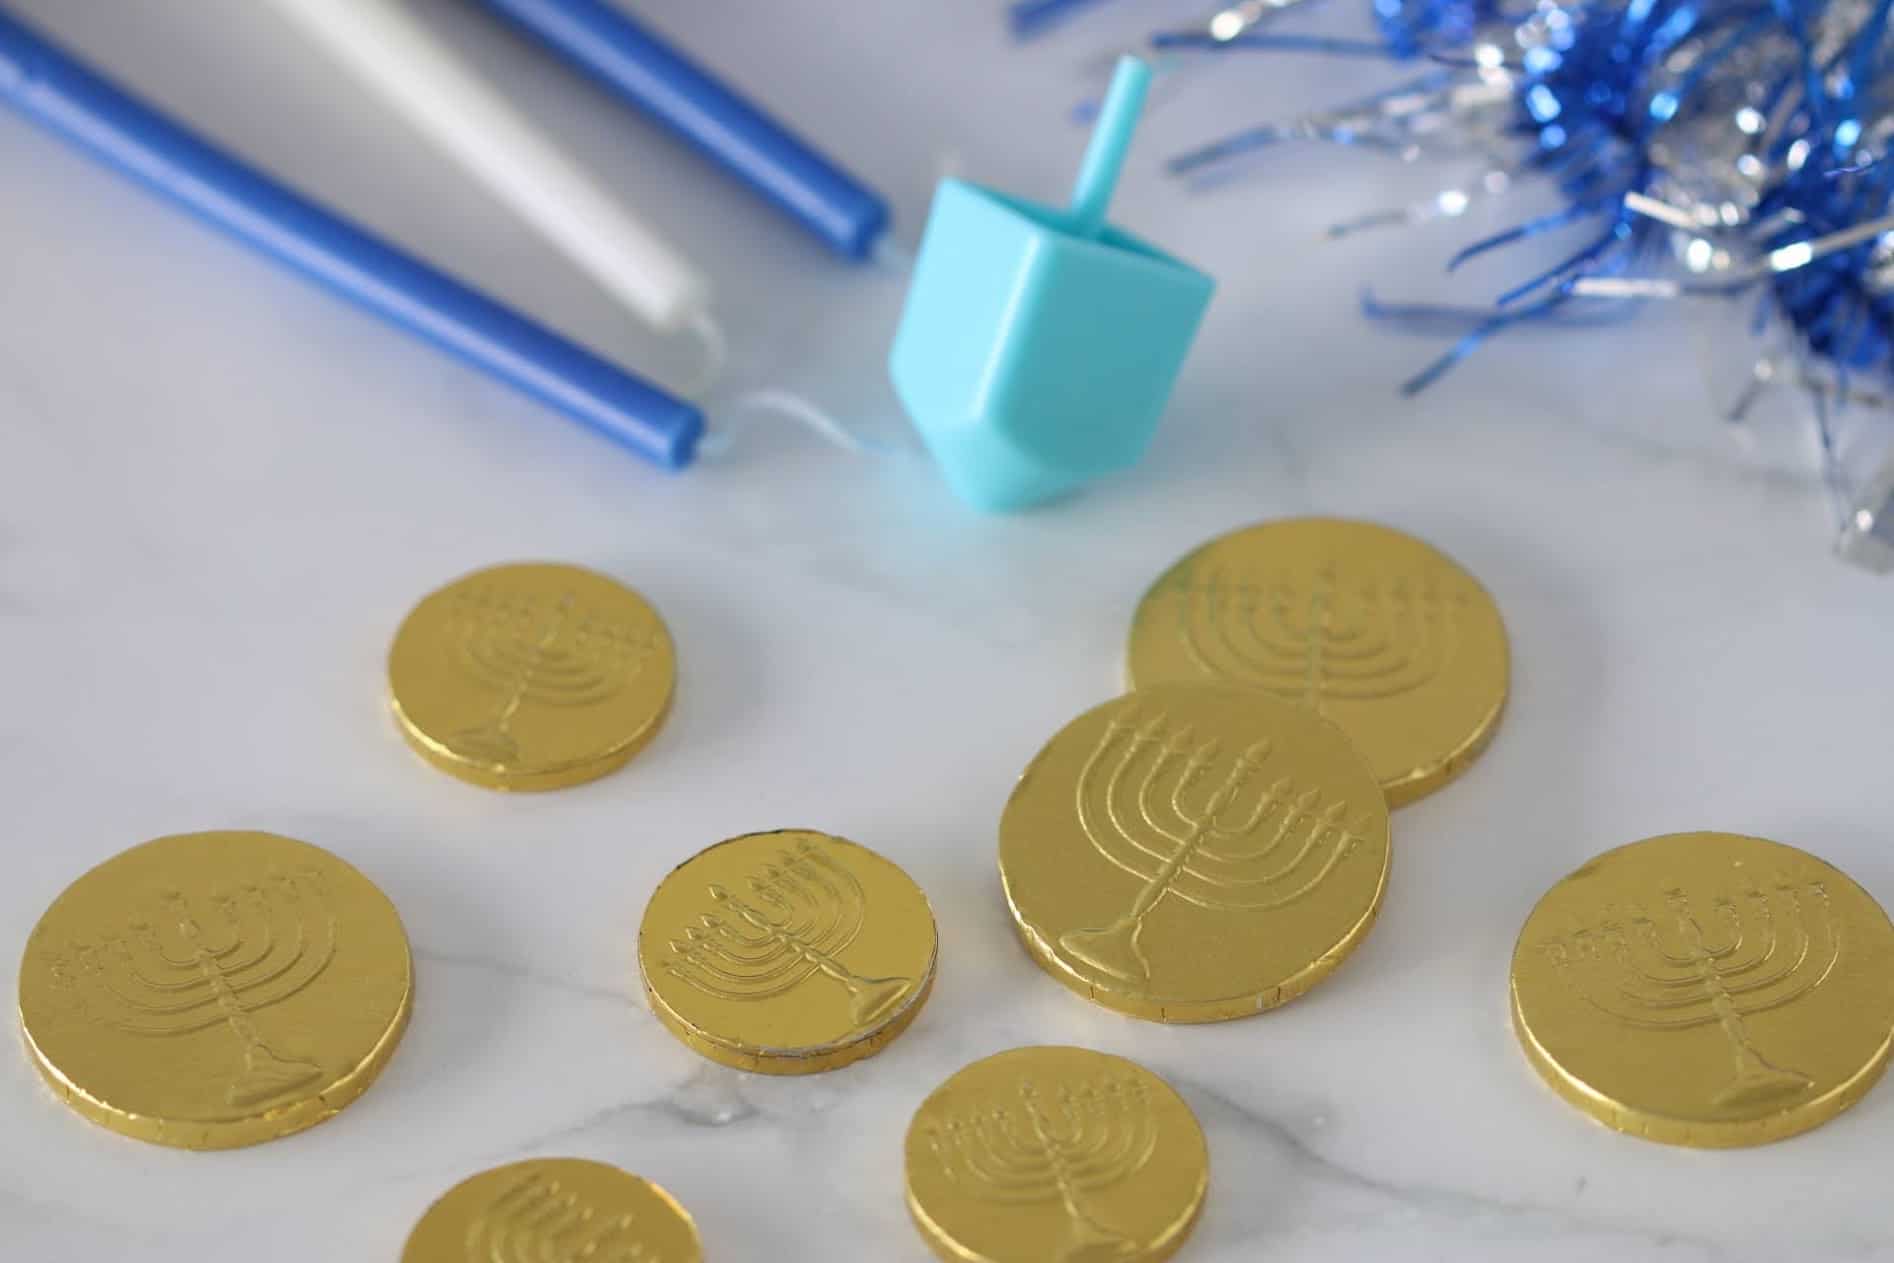 Hanukkah candles, dreidels and gelt chocolate coins